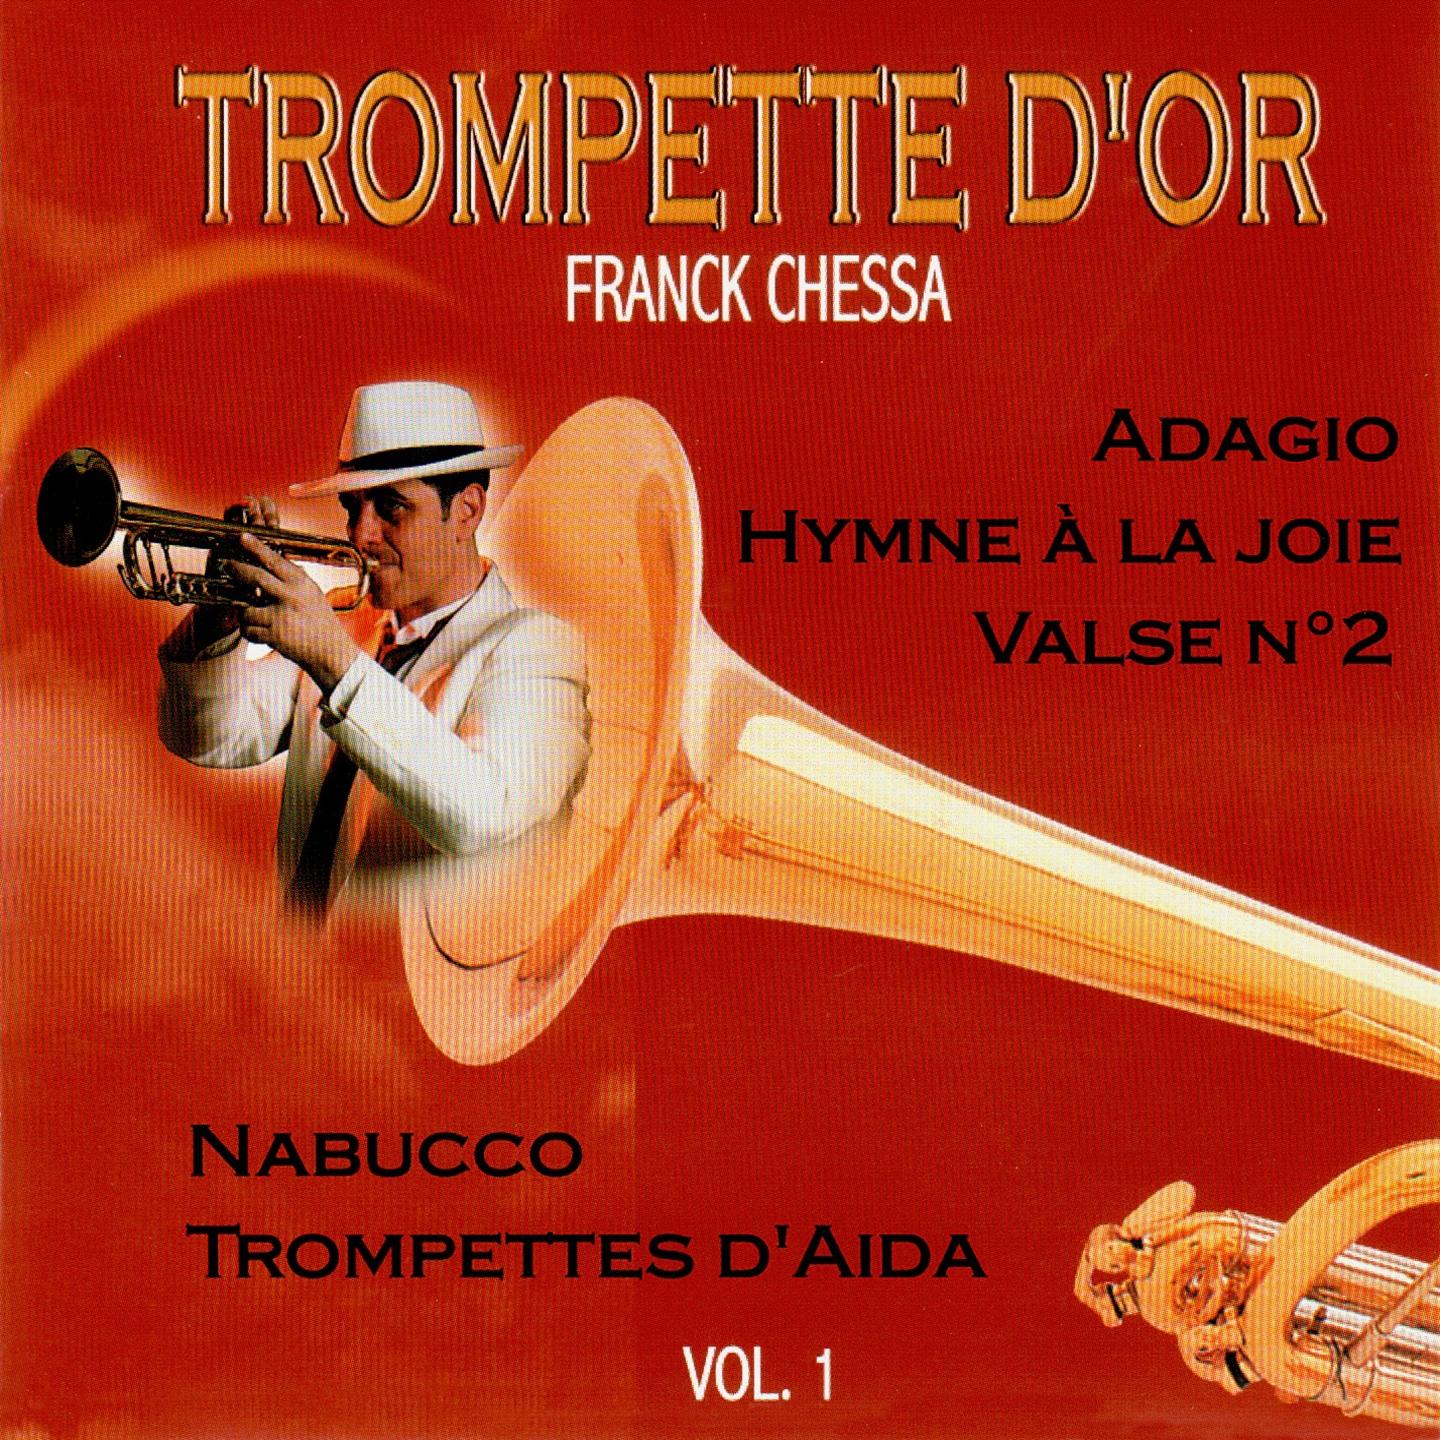 Trompette d'or, vol. 1